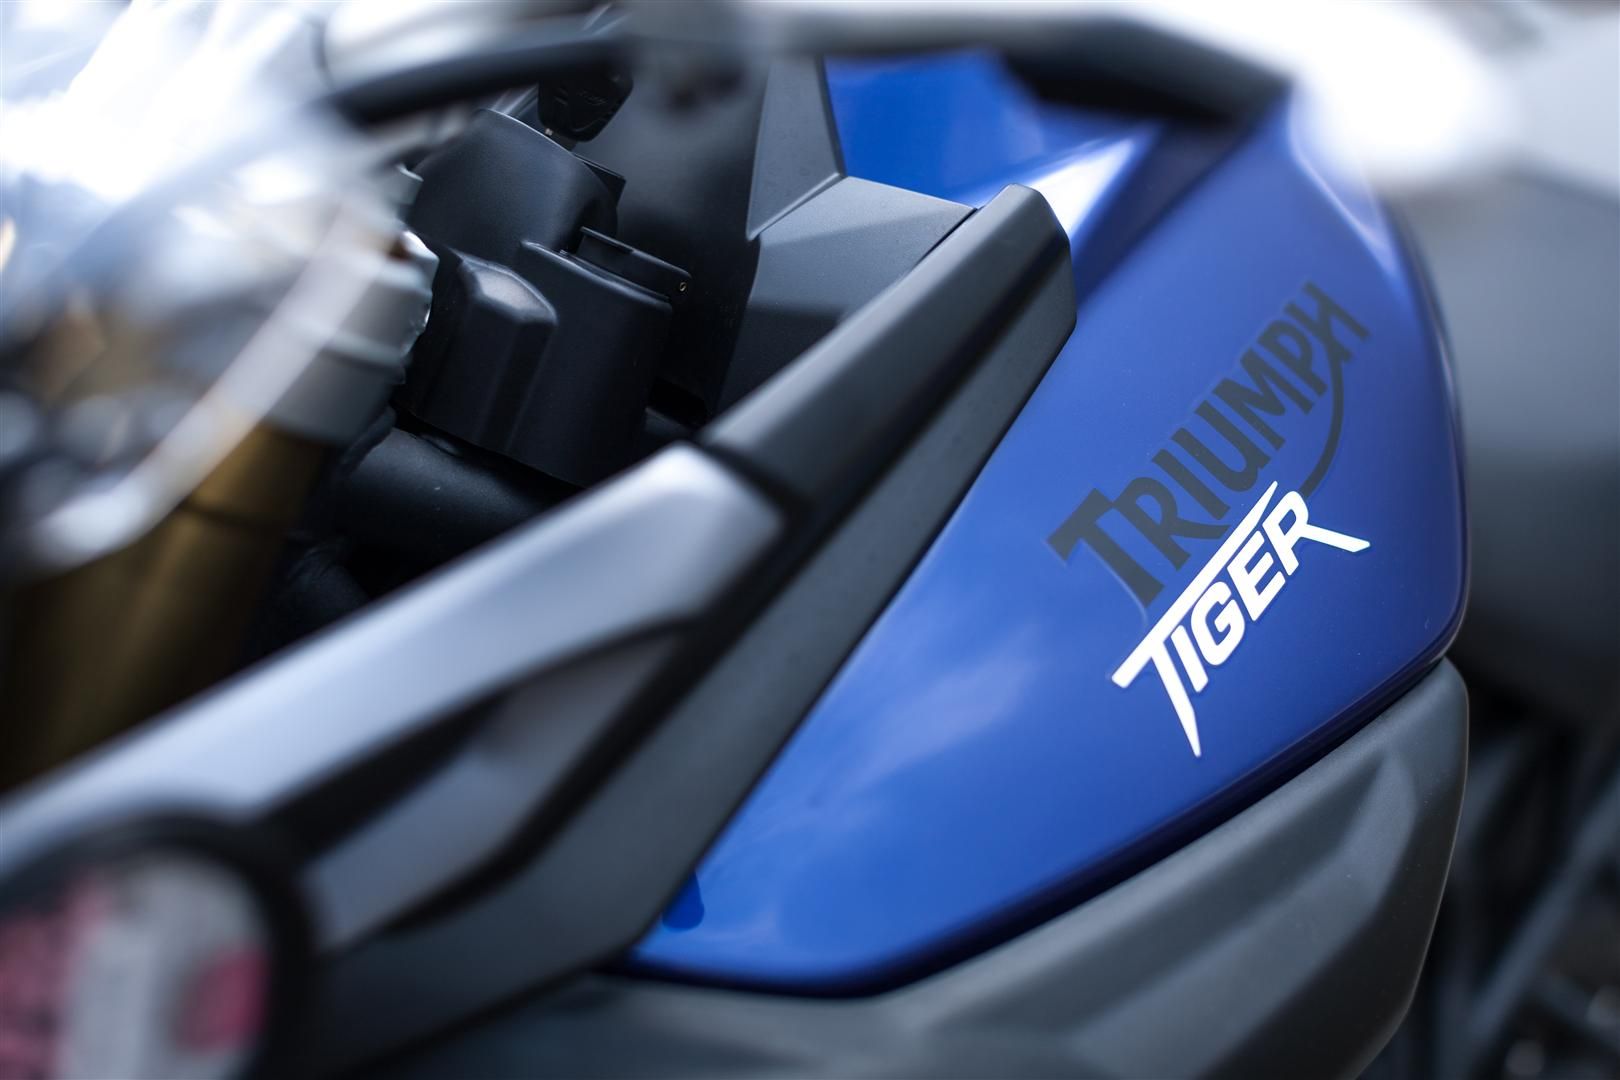 2014 Triumph Tiger 800 ABS